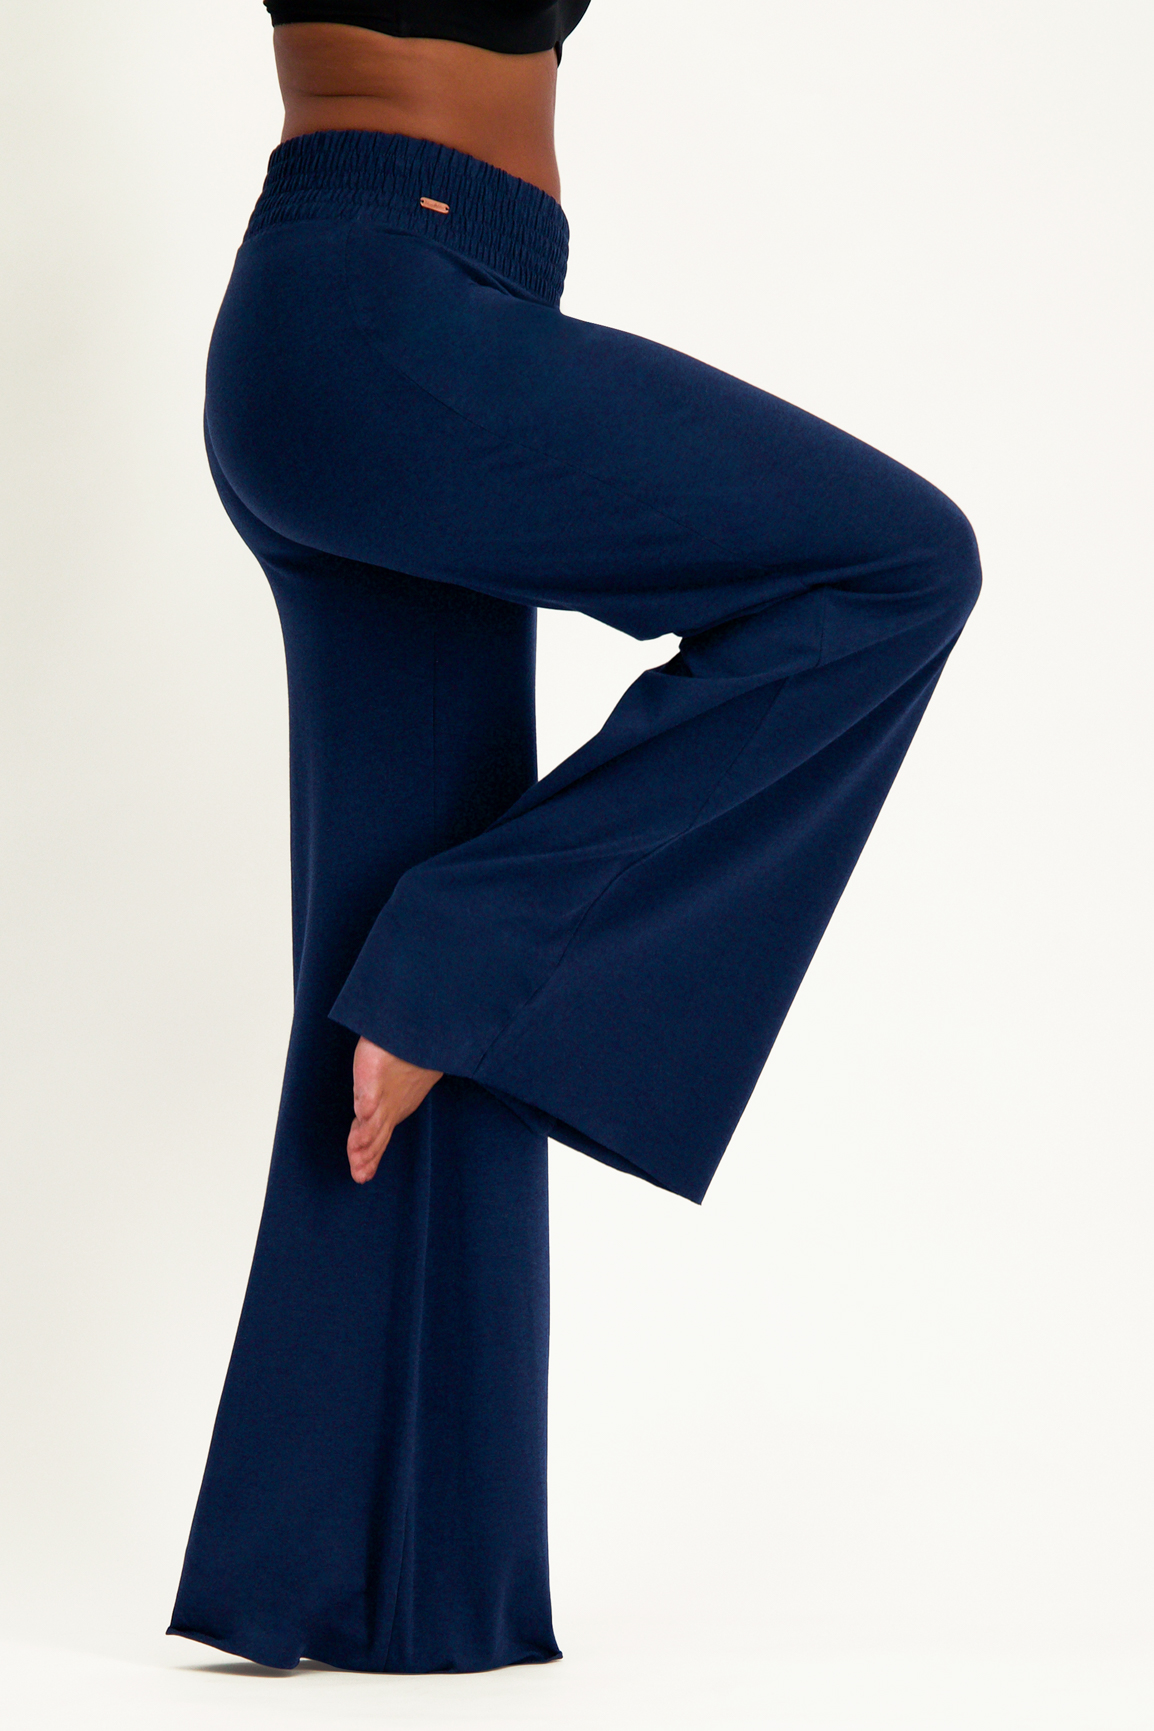 uojfnhb Yoga Pants for Women 2023 Fashion Gradient Hollow Out